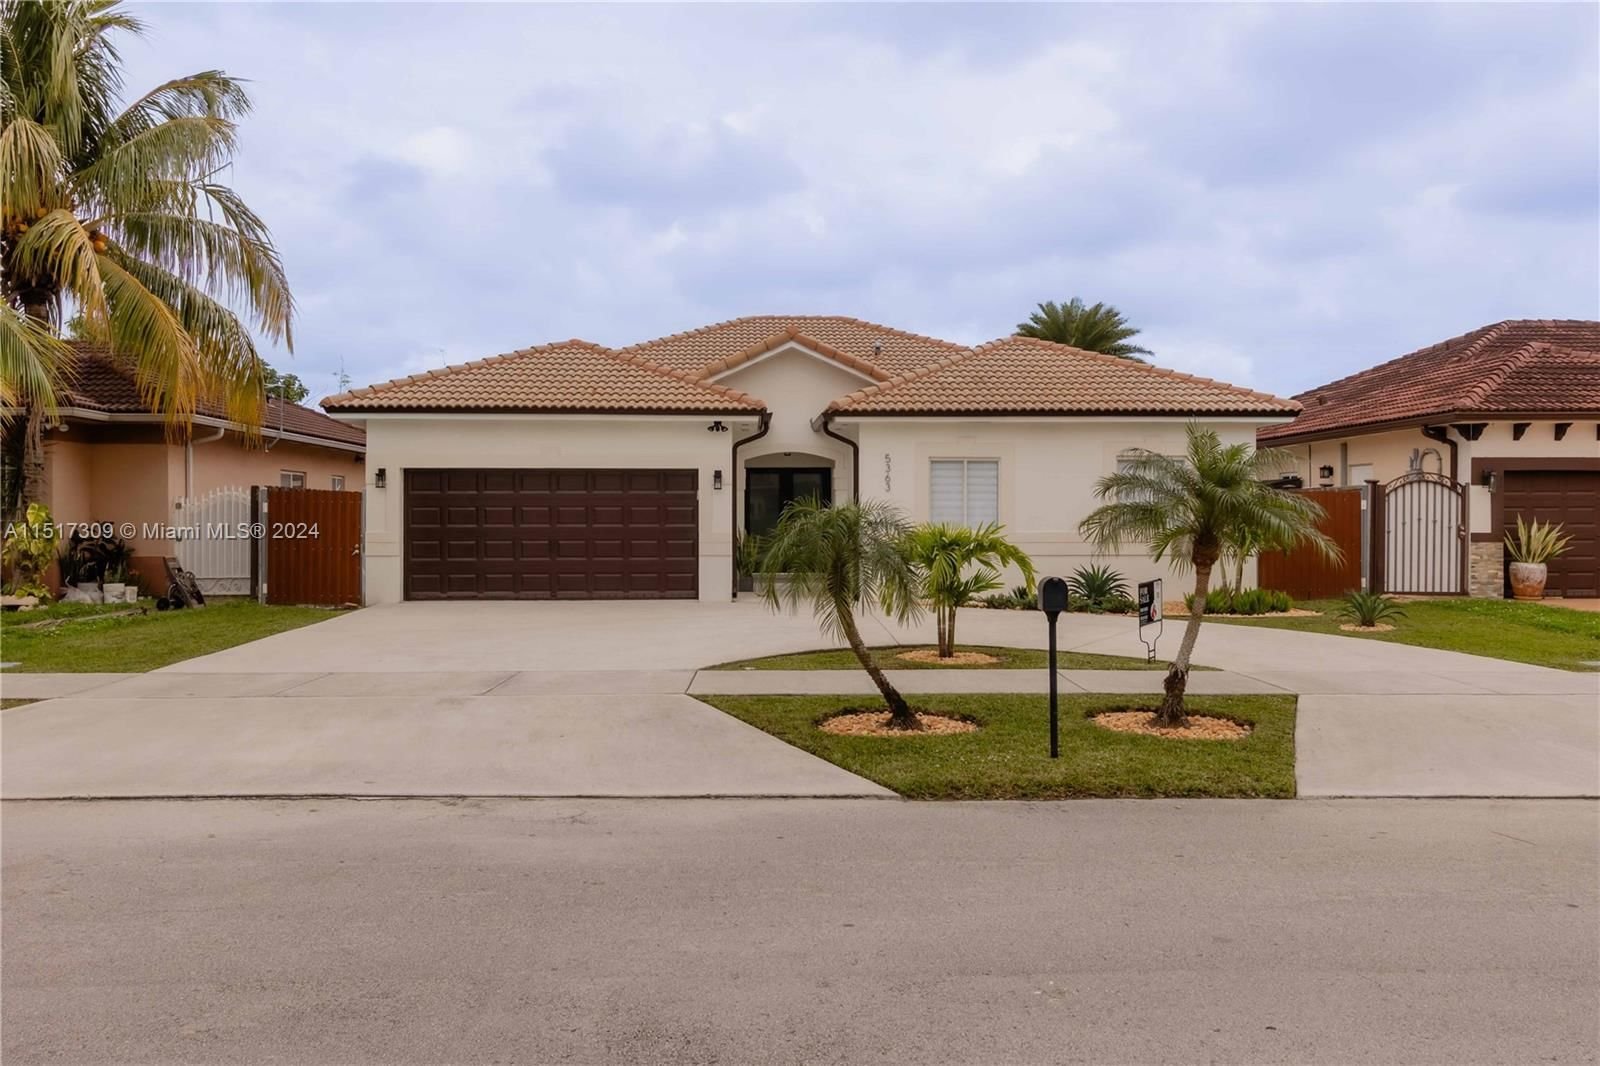 Real estate property located at 5363 SW 165 CT, Miami-Dade County, JUSTIN GARDEN, Miami, FL